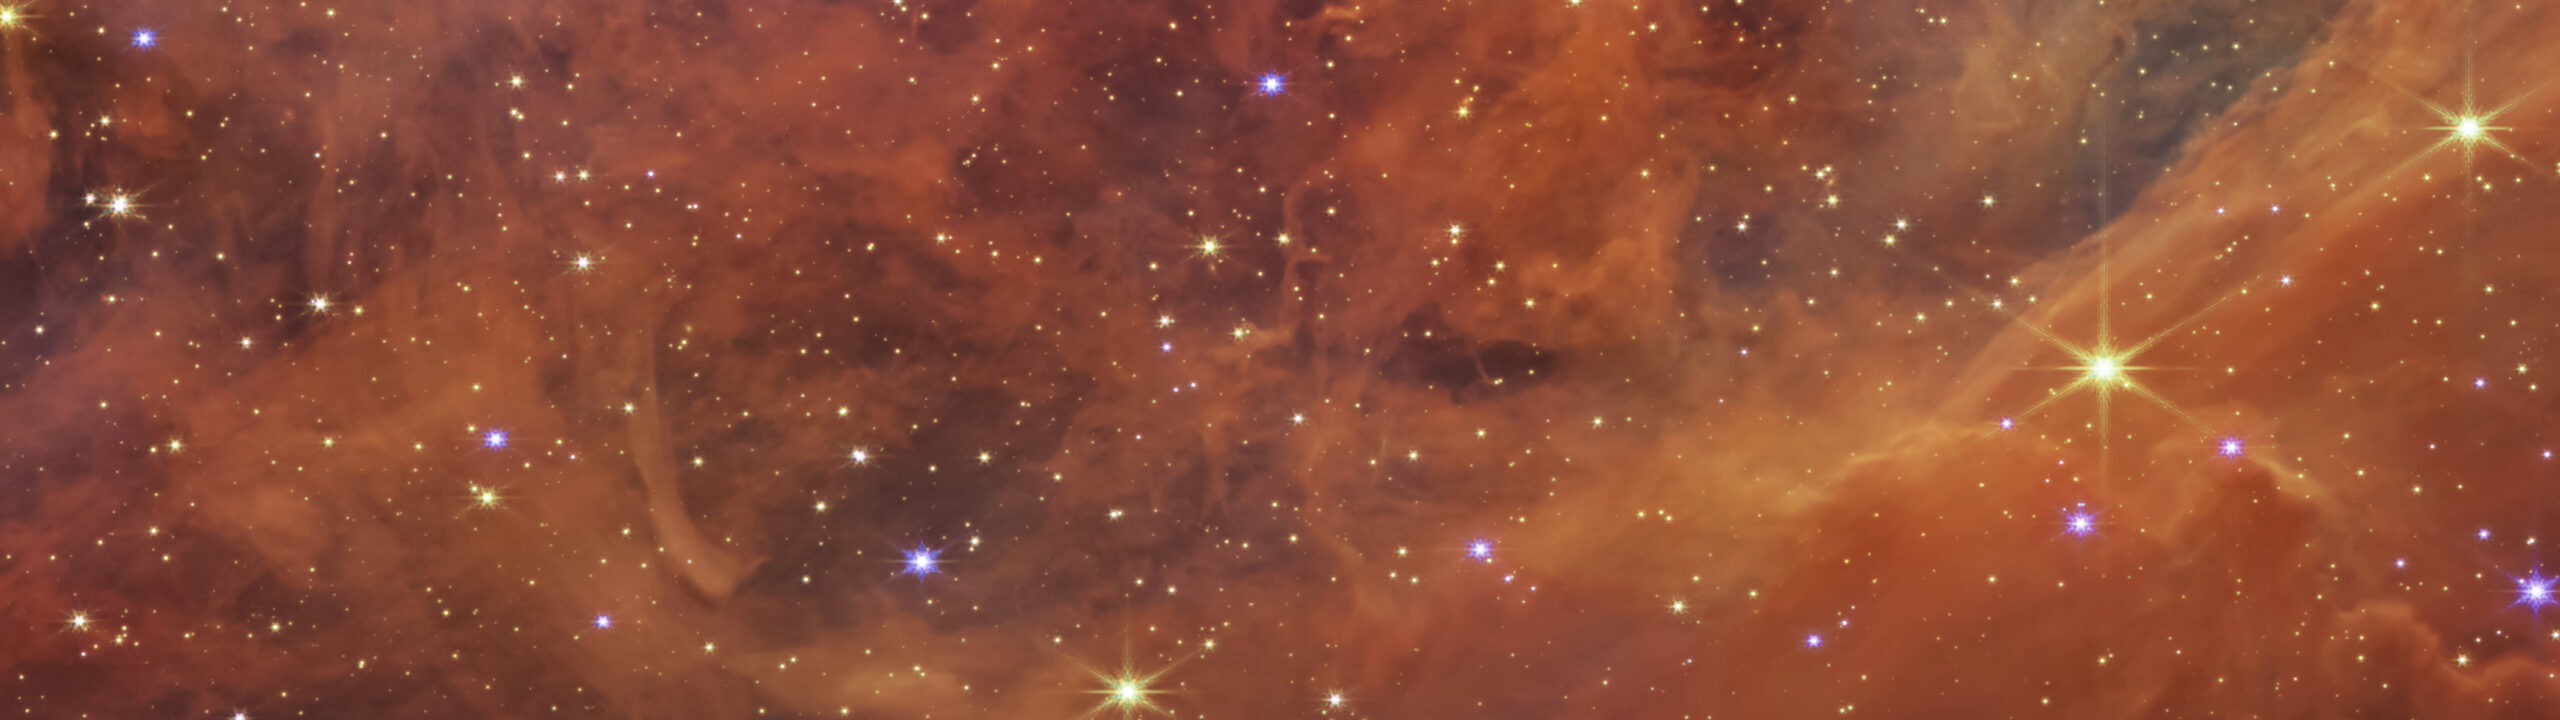 Wallpaper Space, James Webb Space Telescope, Neb8